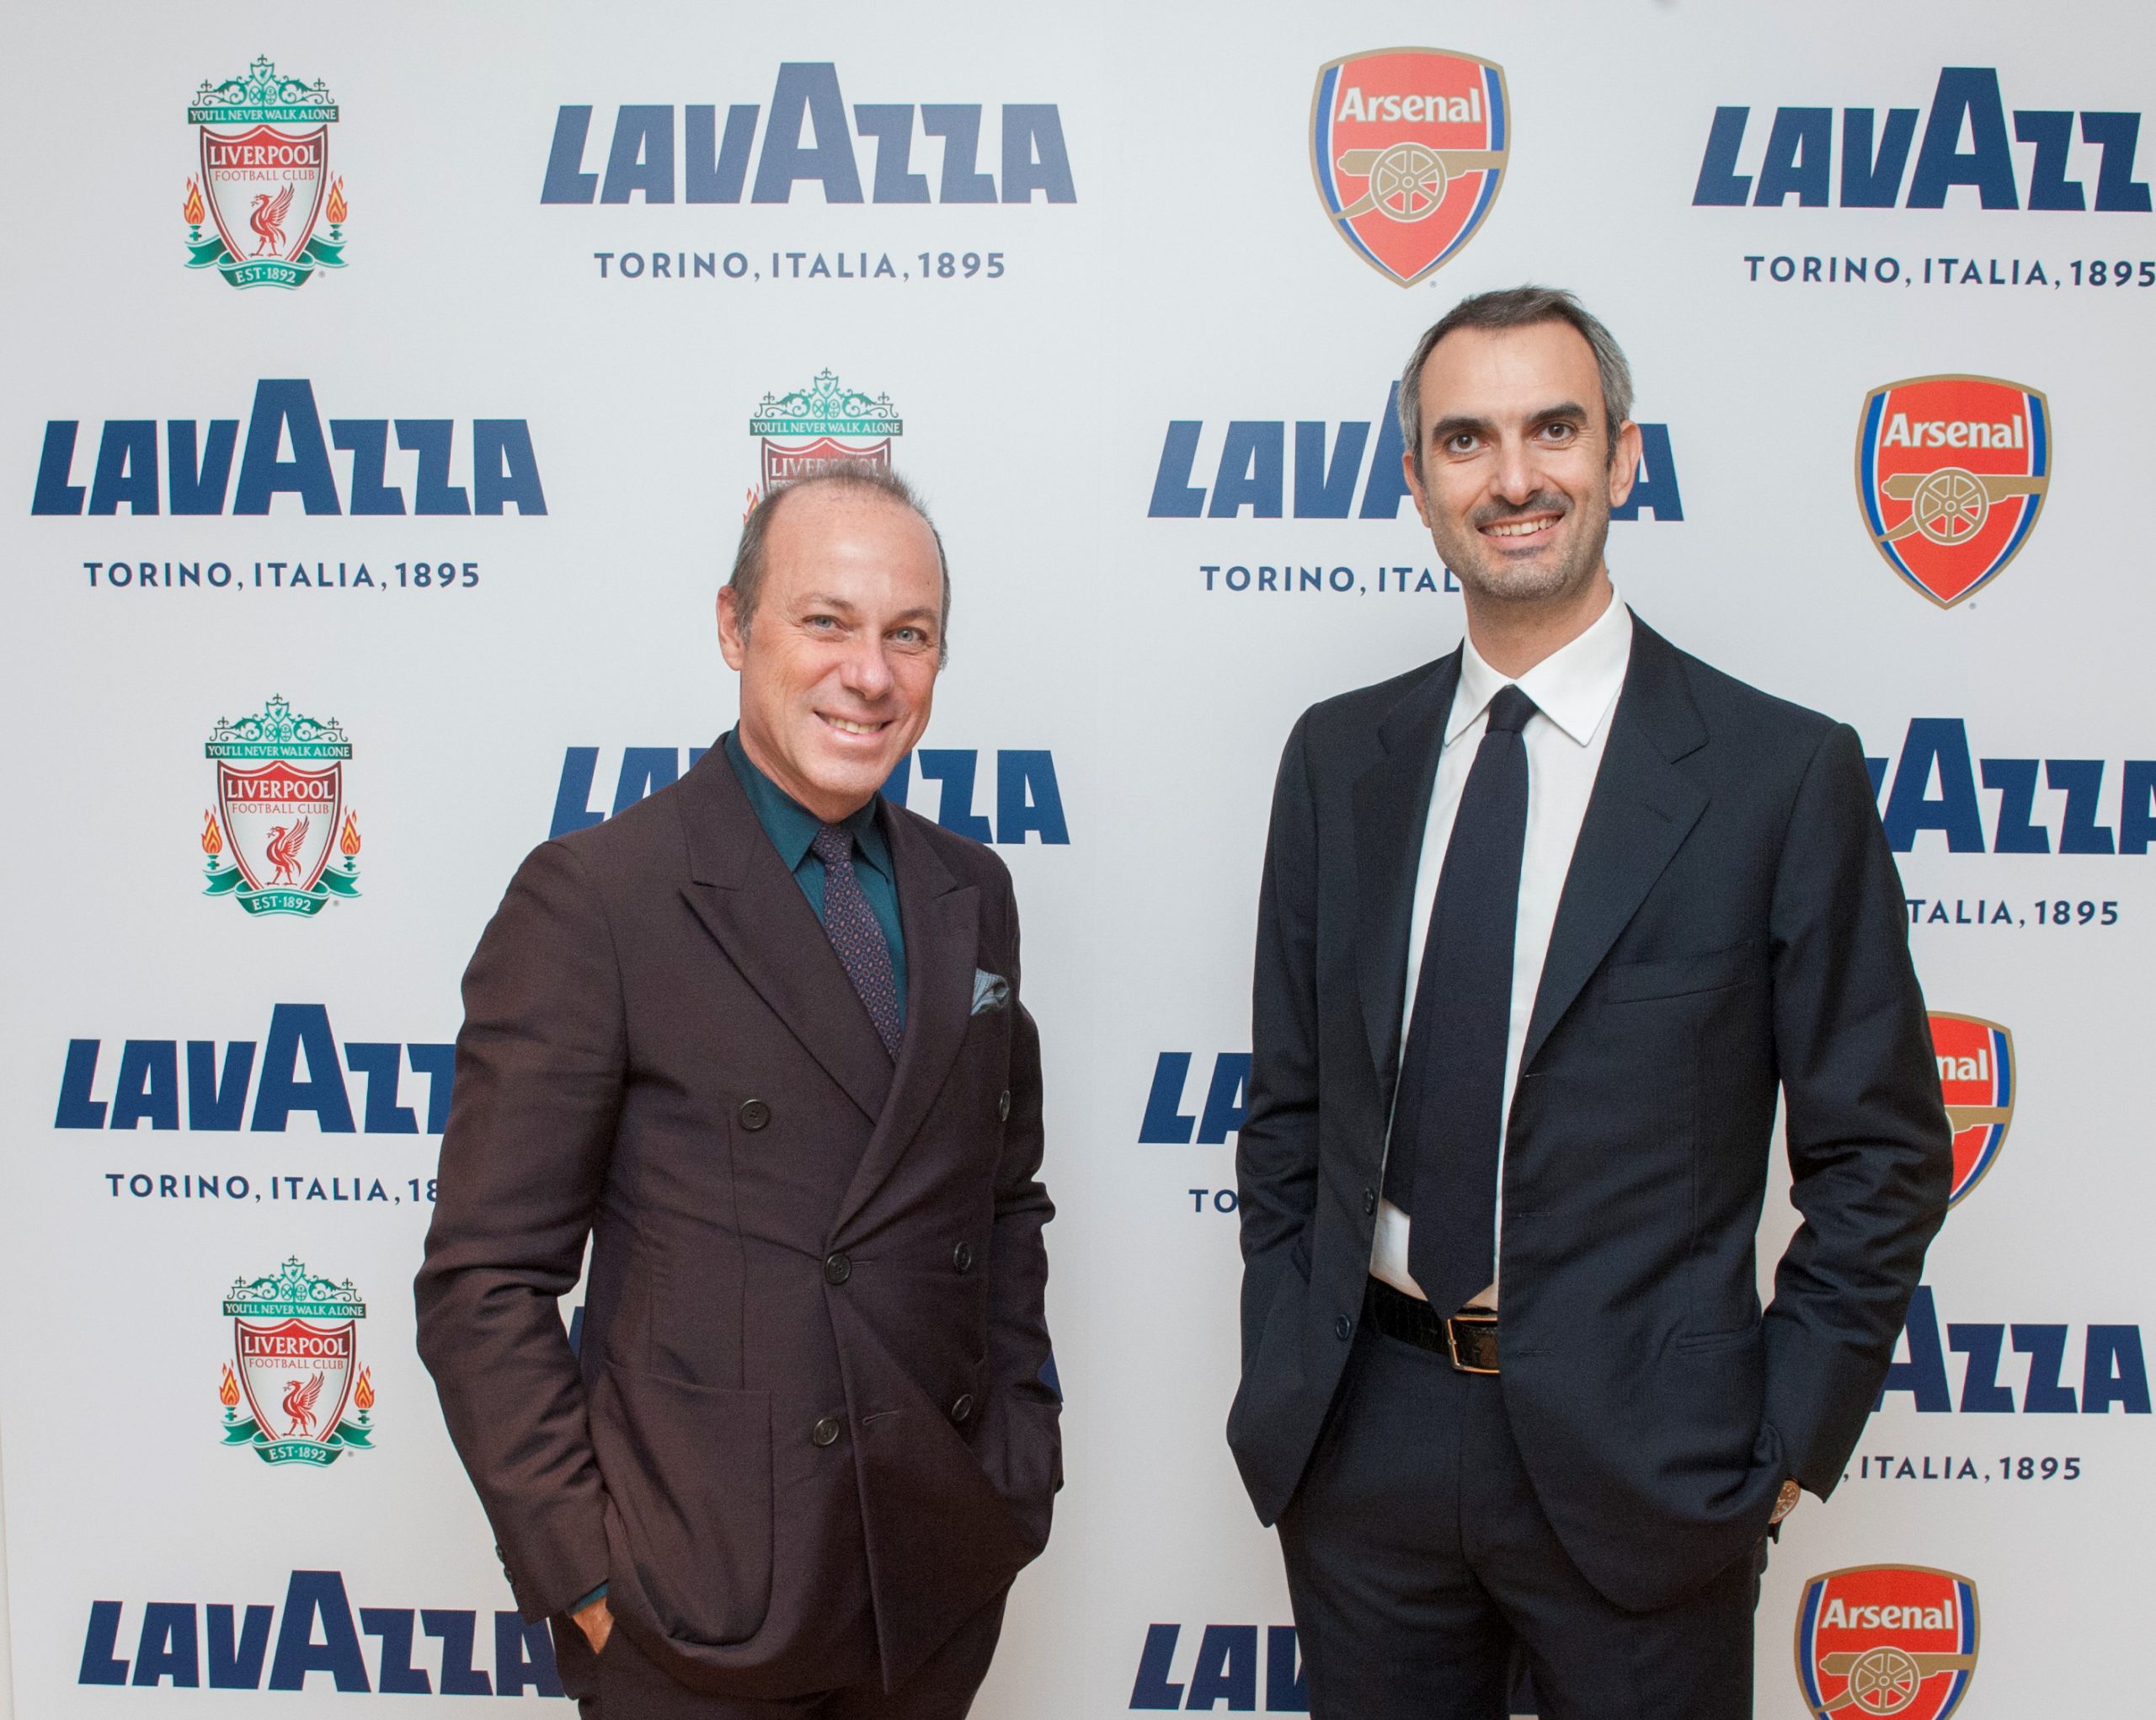 Lavazza oficjalną kawą Arsenalu i Liverpoolu